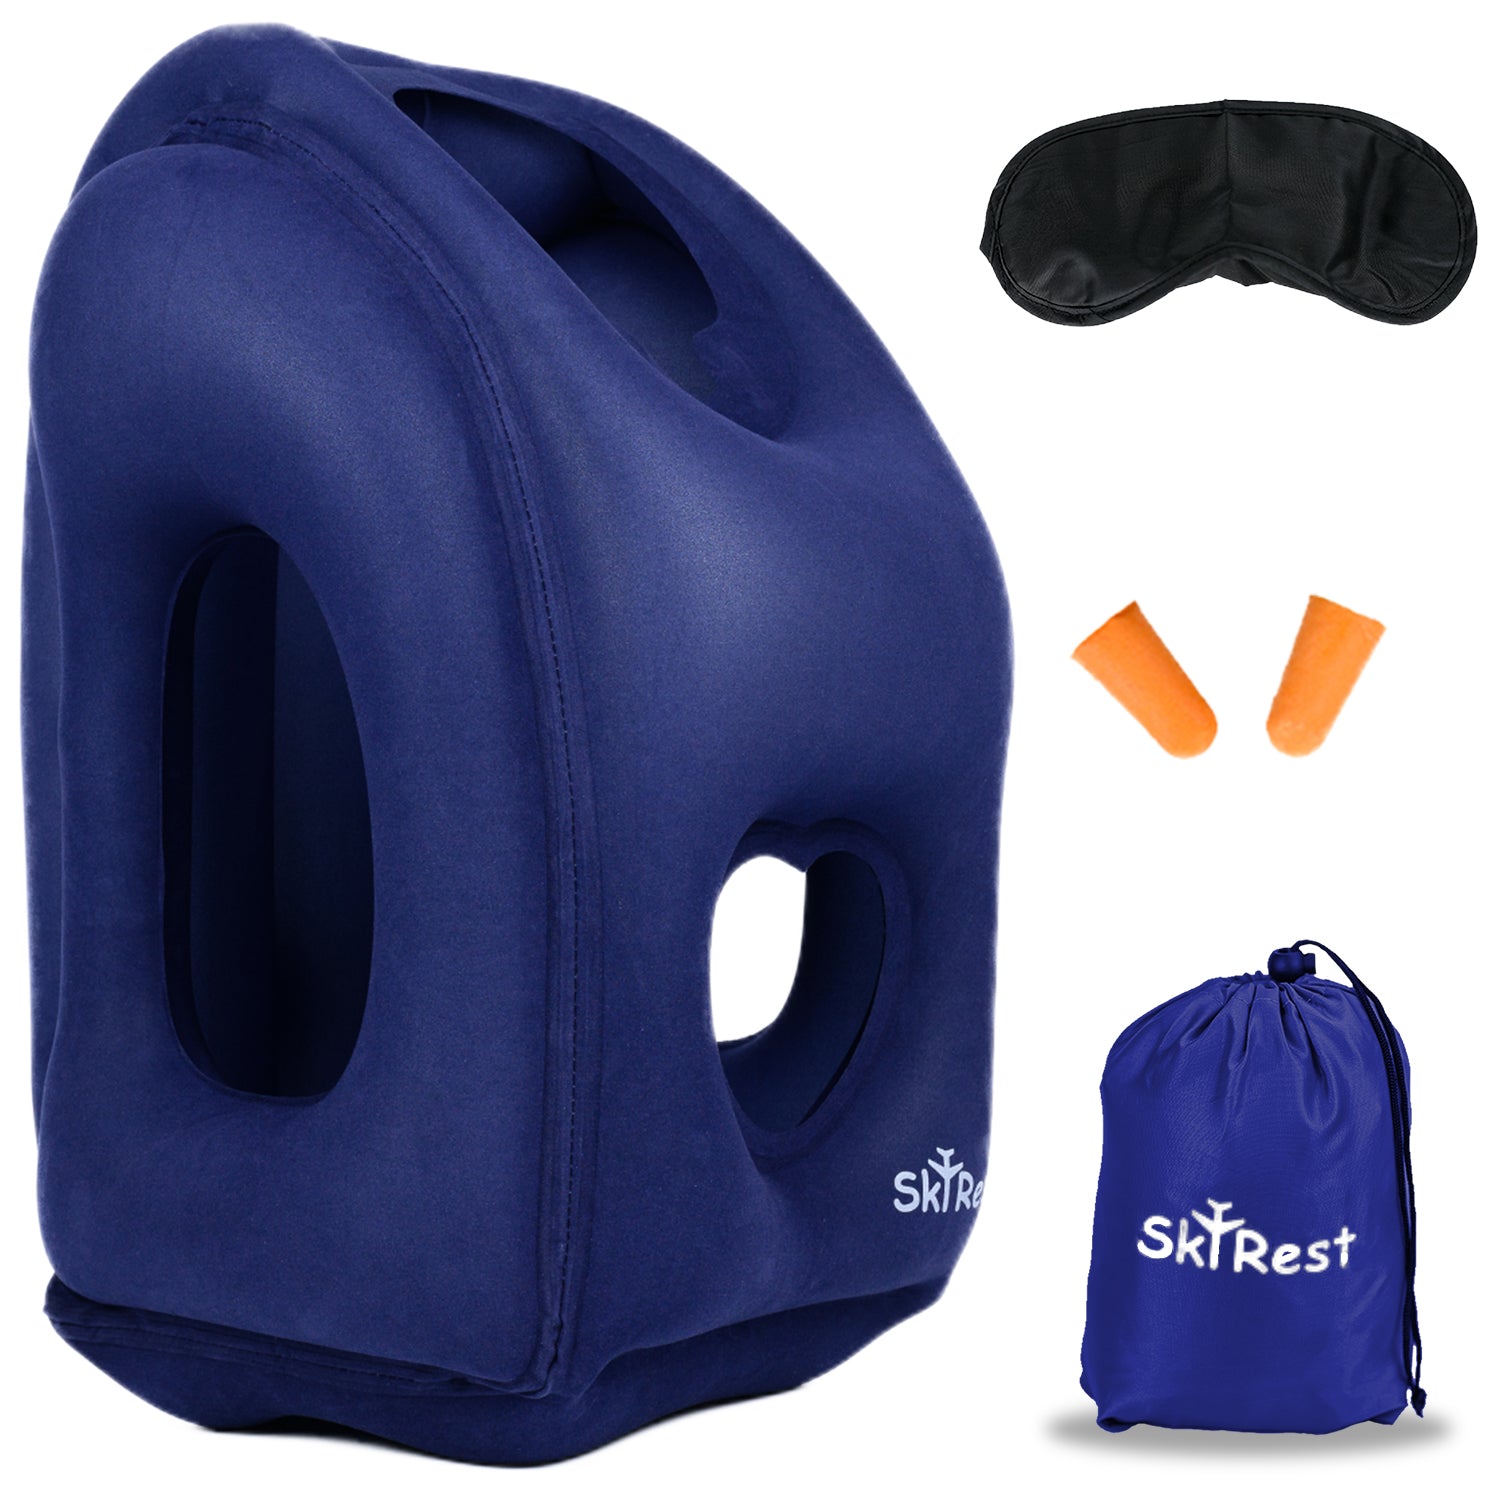 Inflatable Air Cushion Travel Pillow Headrest